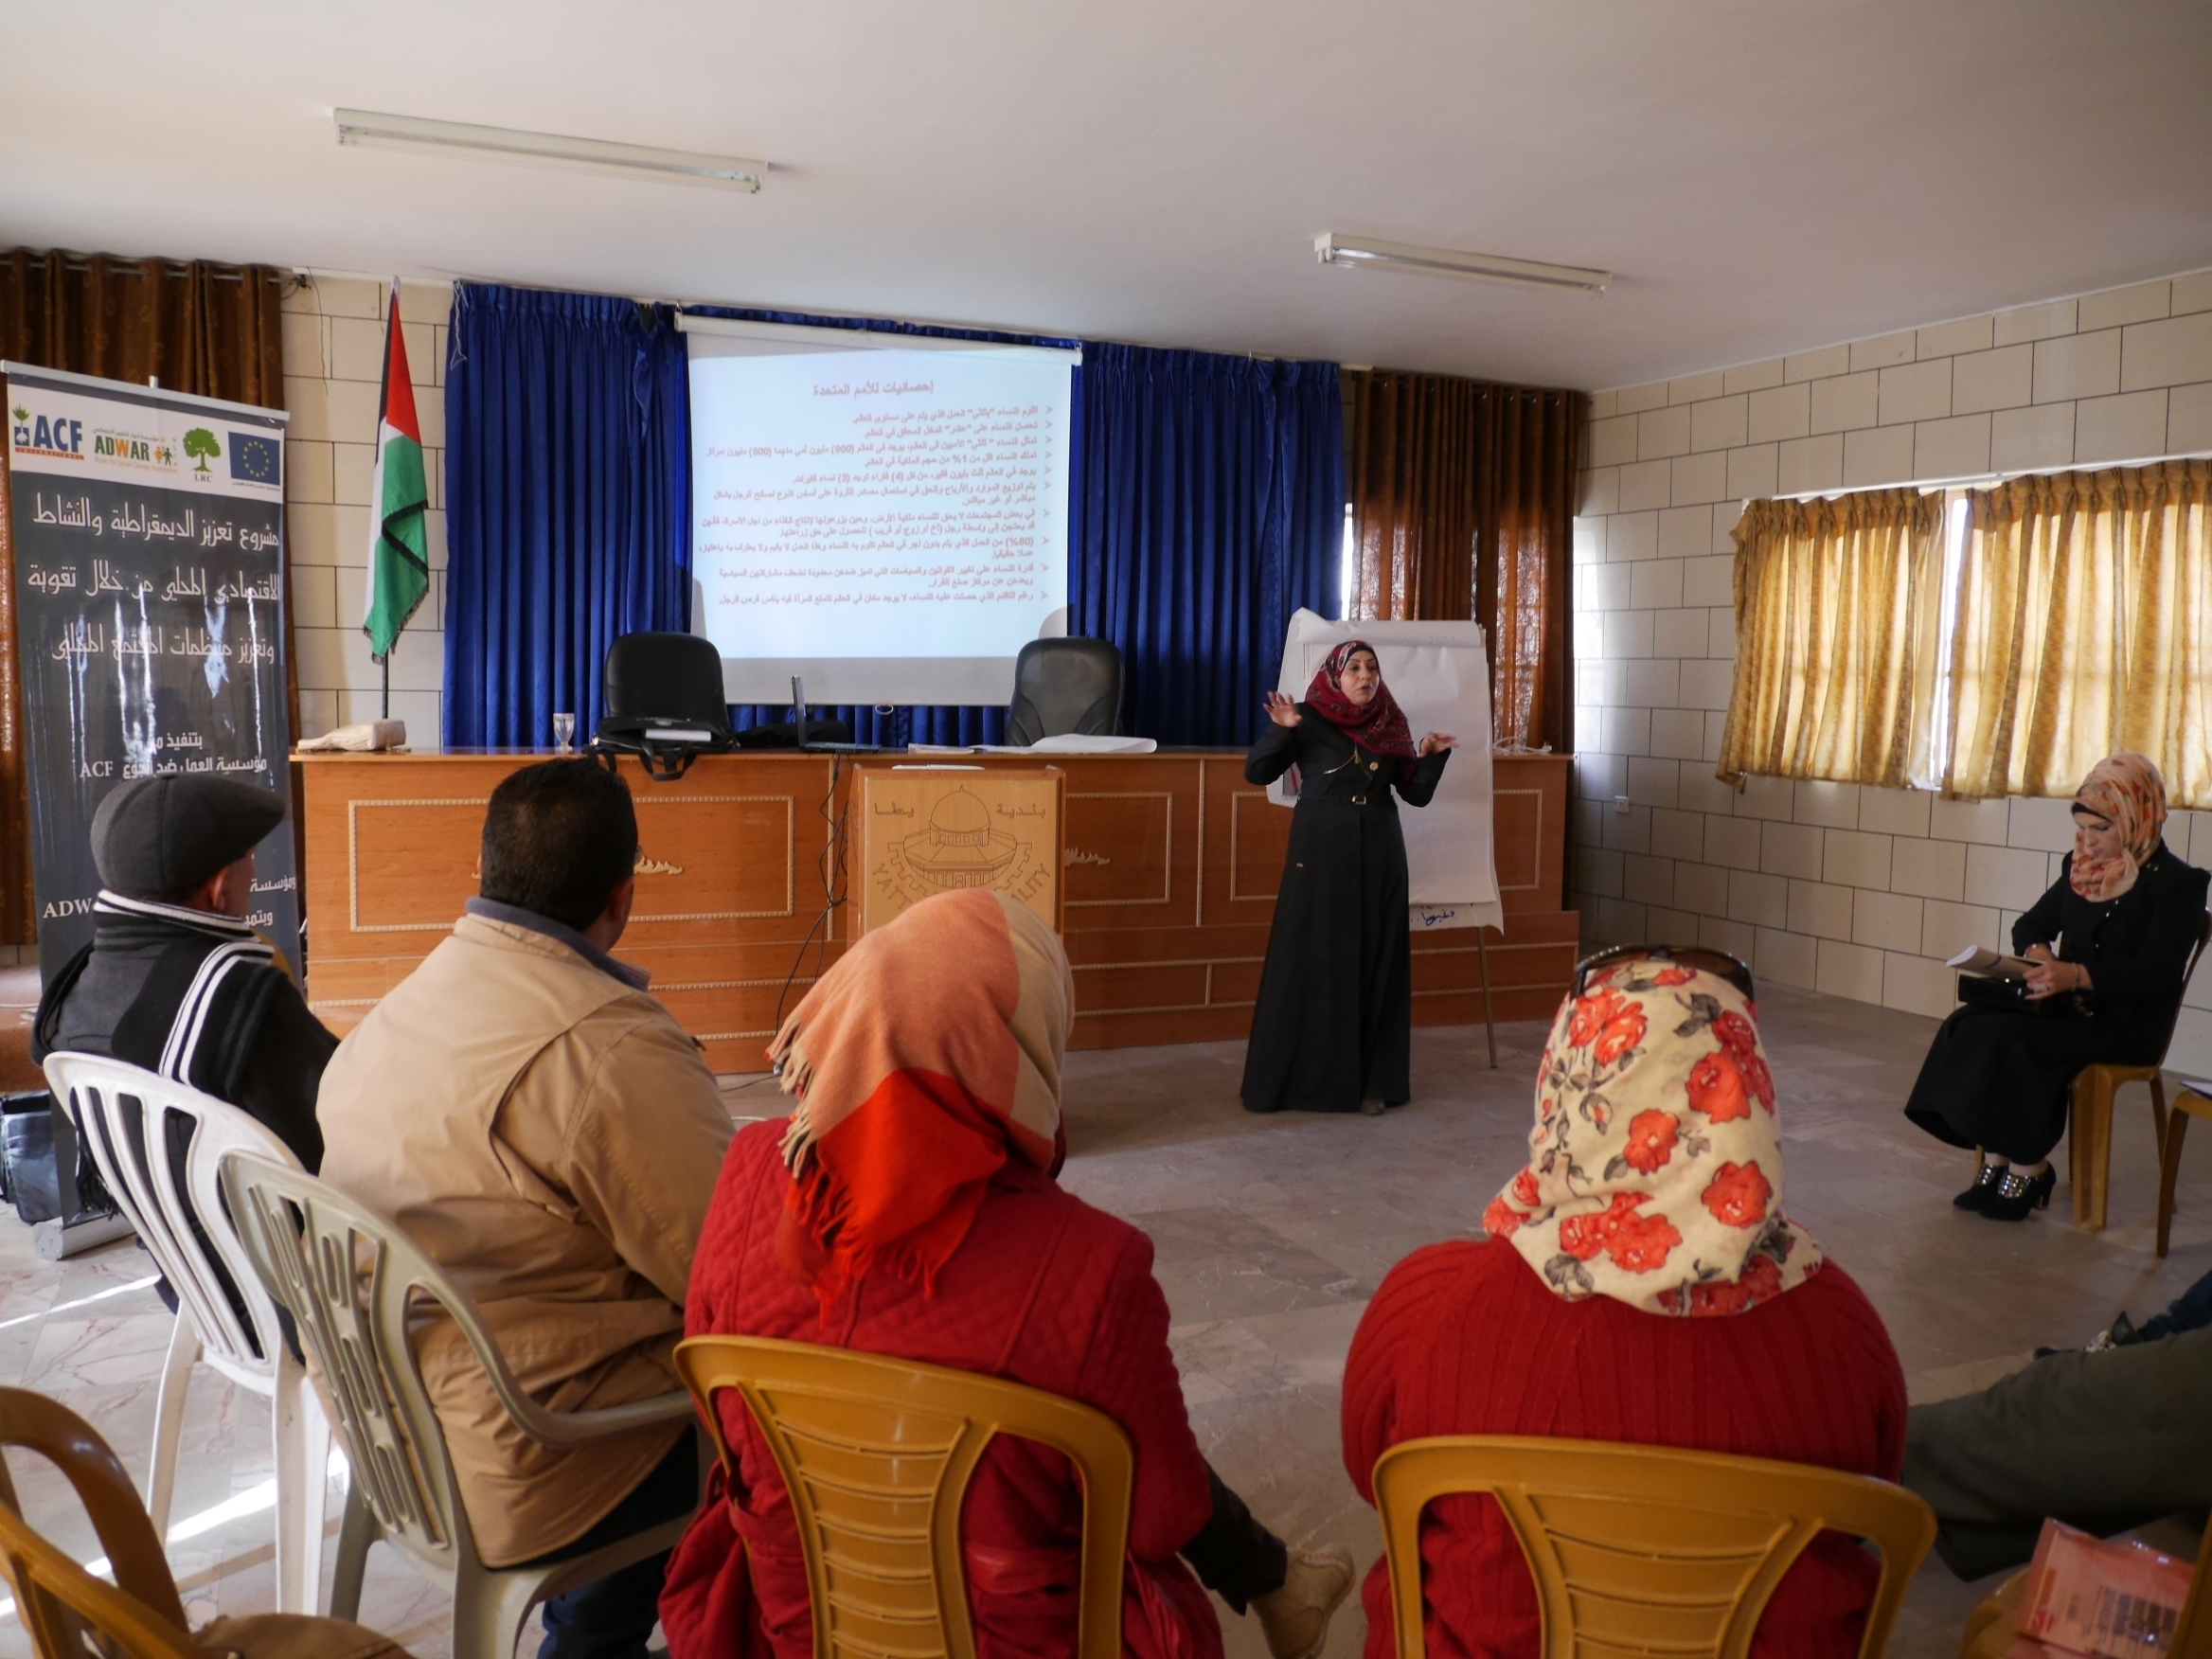  Third day in Gender Mainstreaming Training